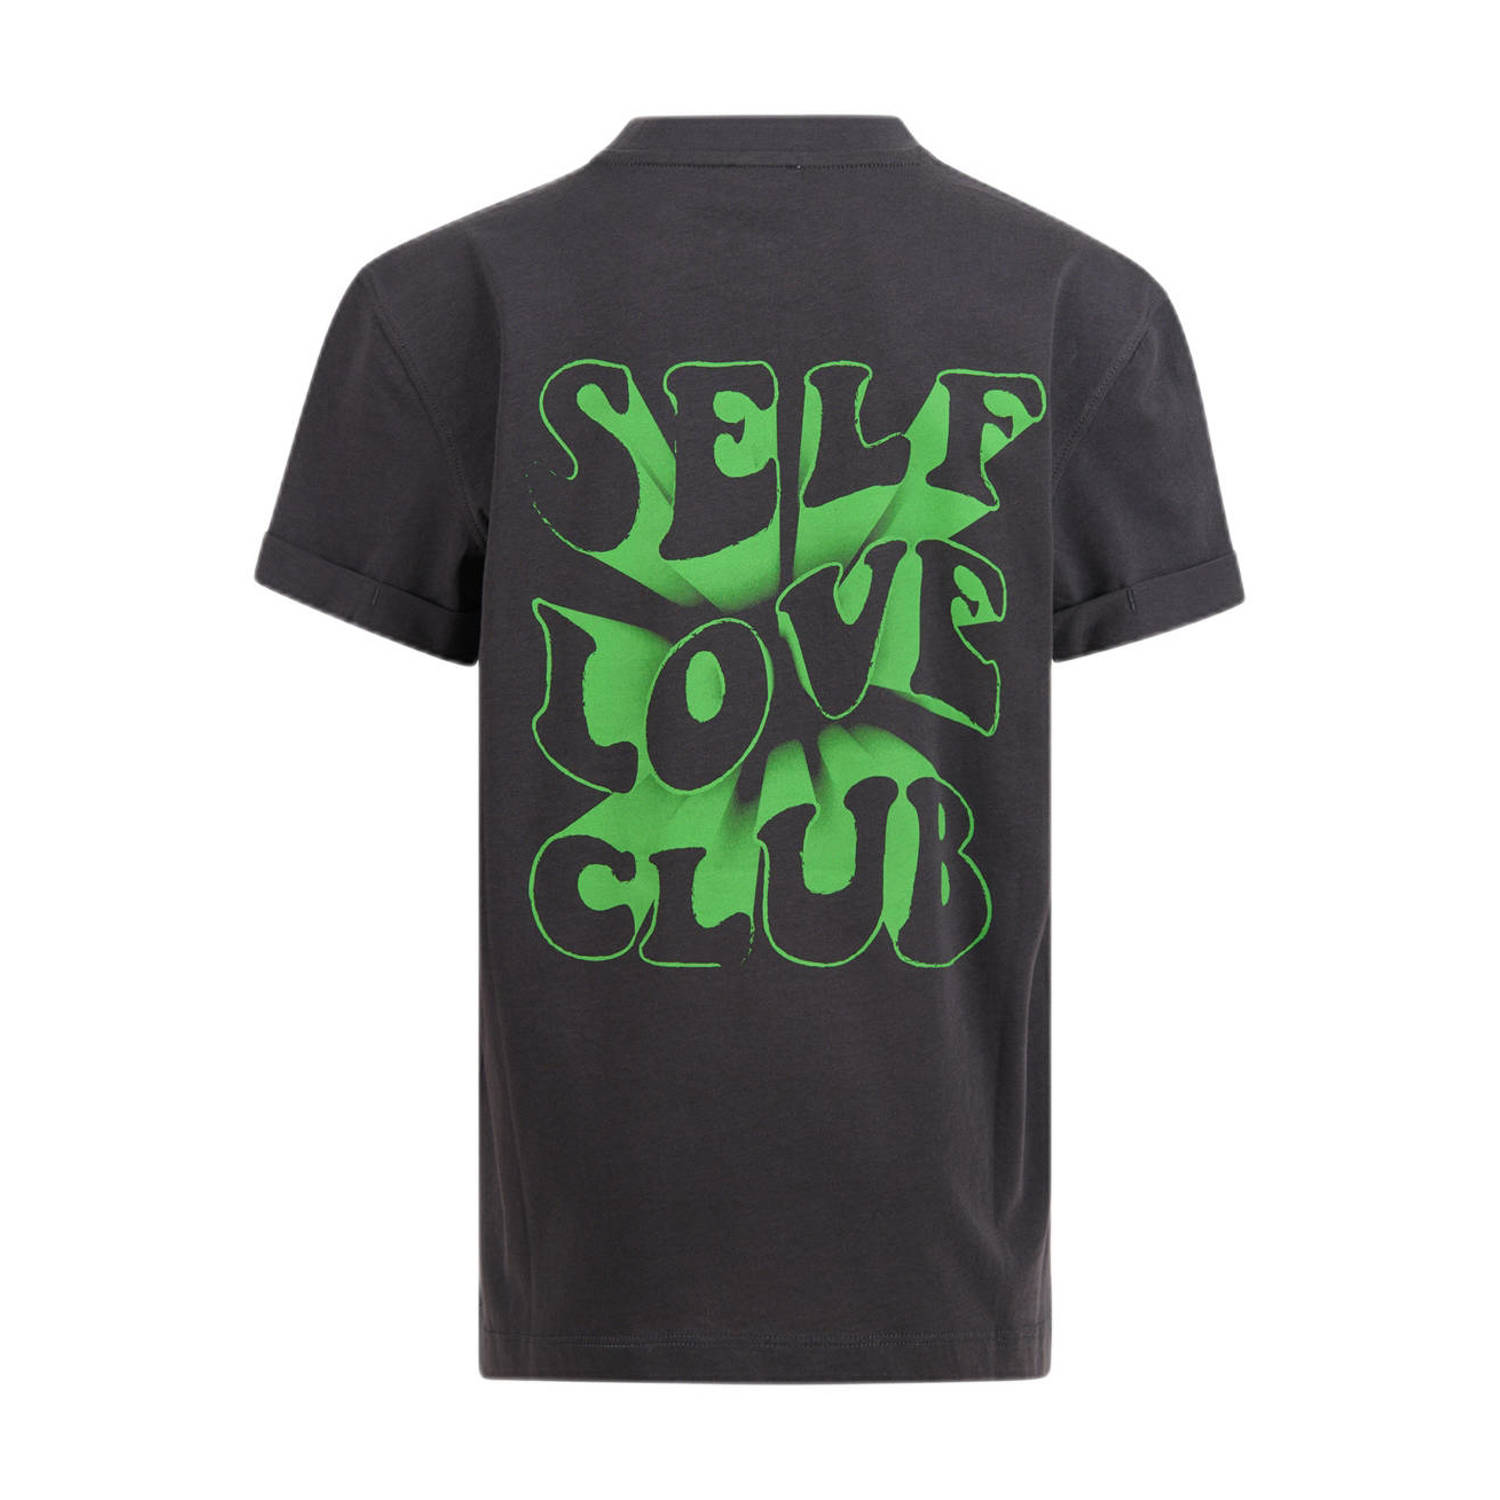 Shoeby T-shirt met backprint donkergrijs groen